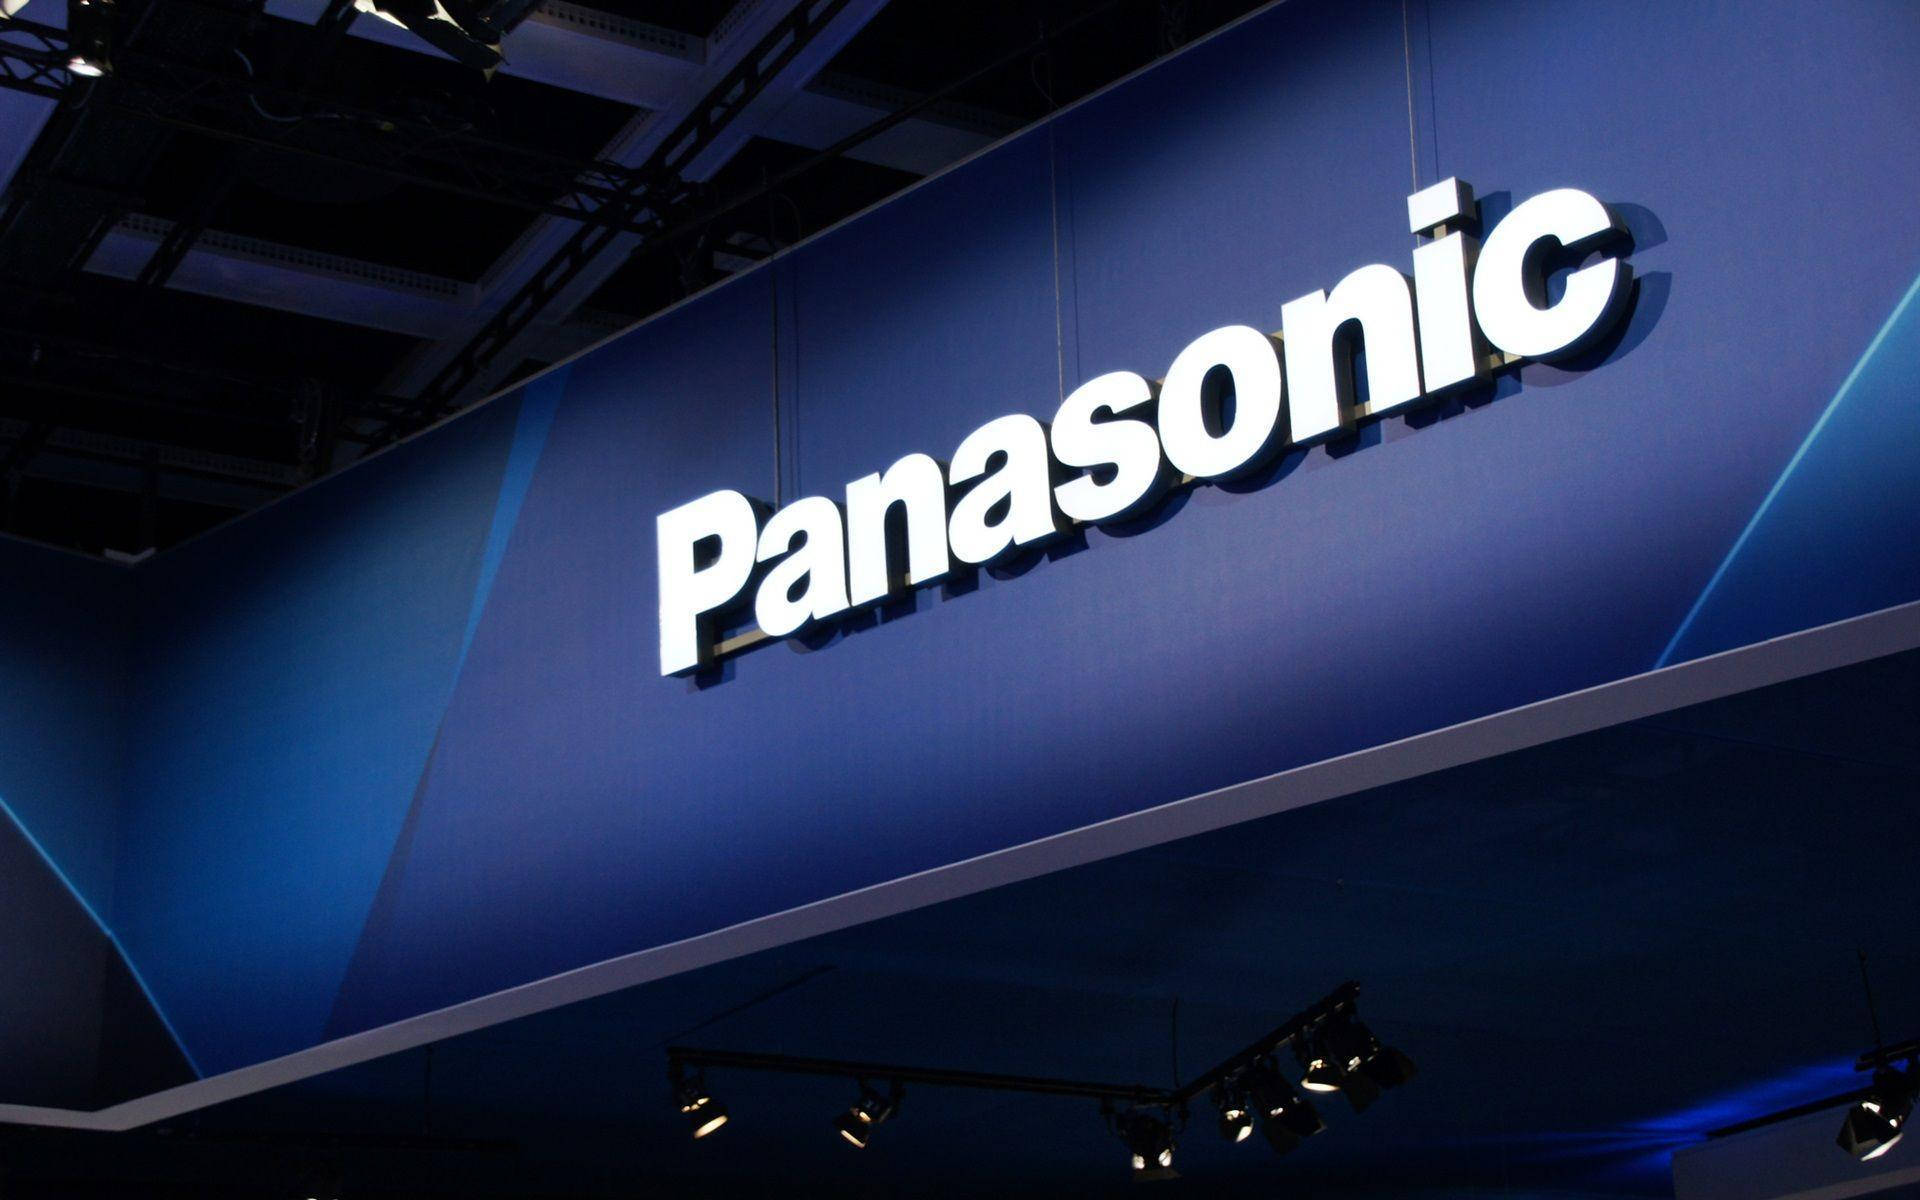 Panasonic Facade In Blue Background